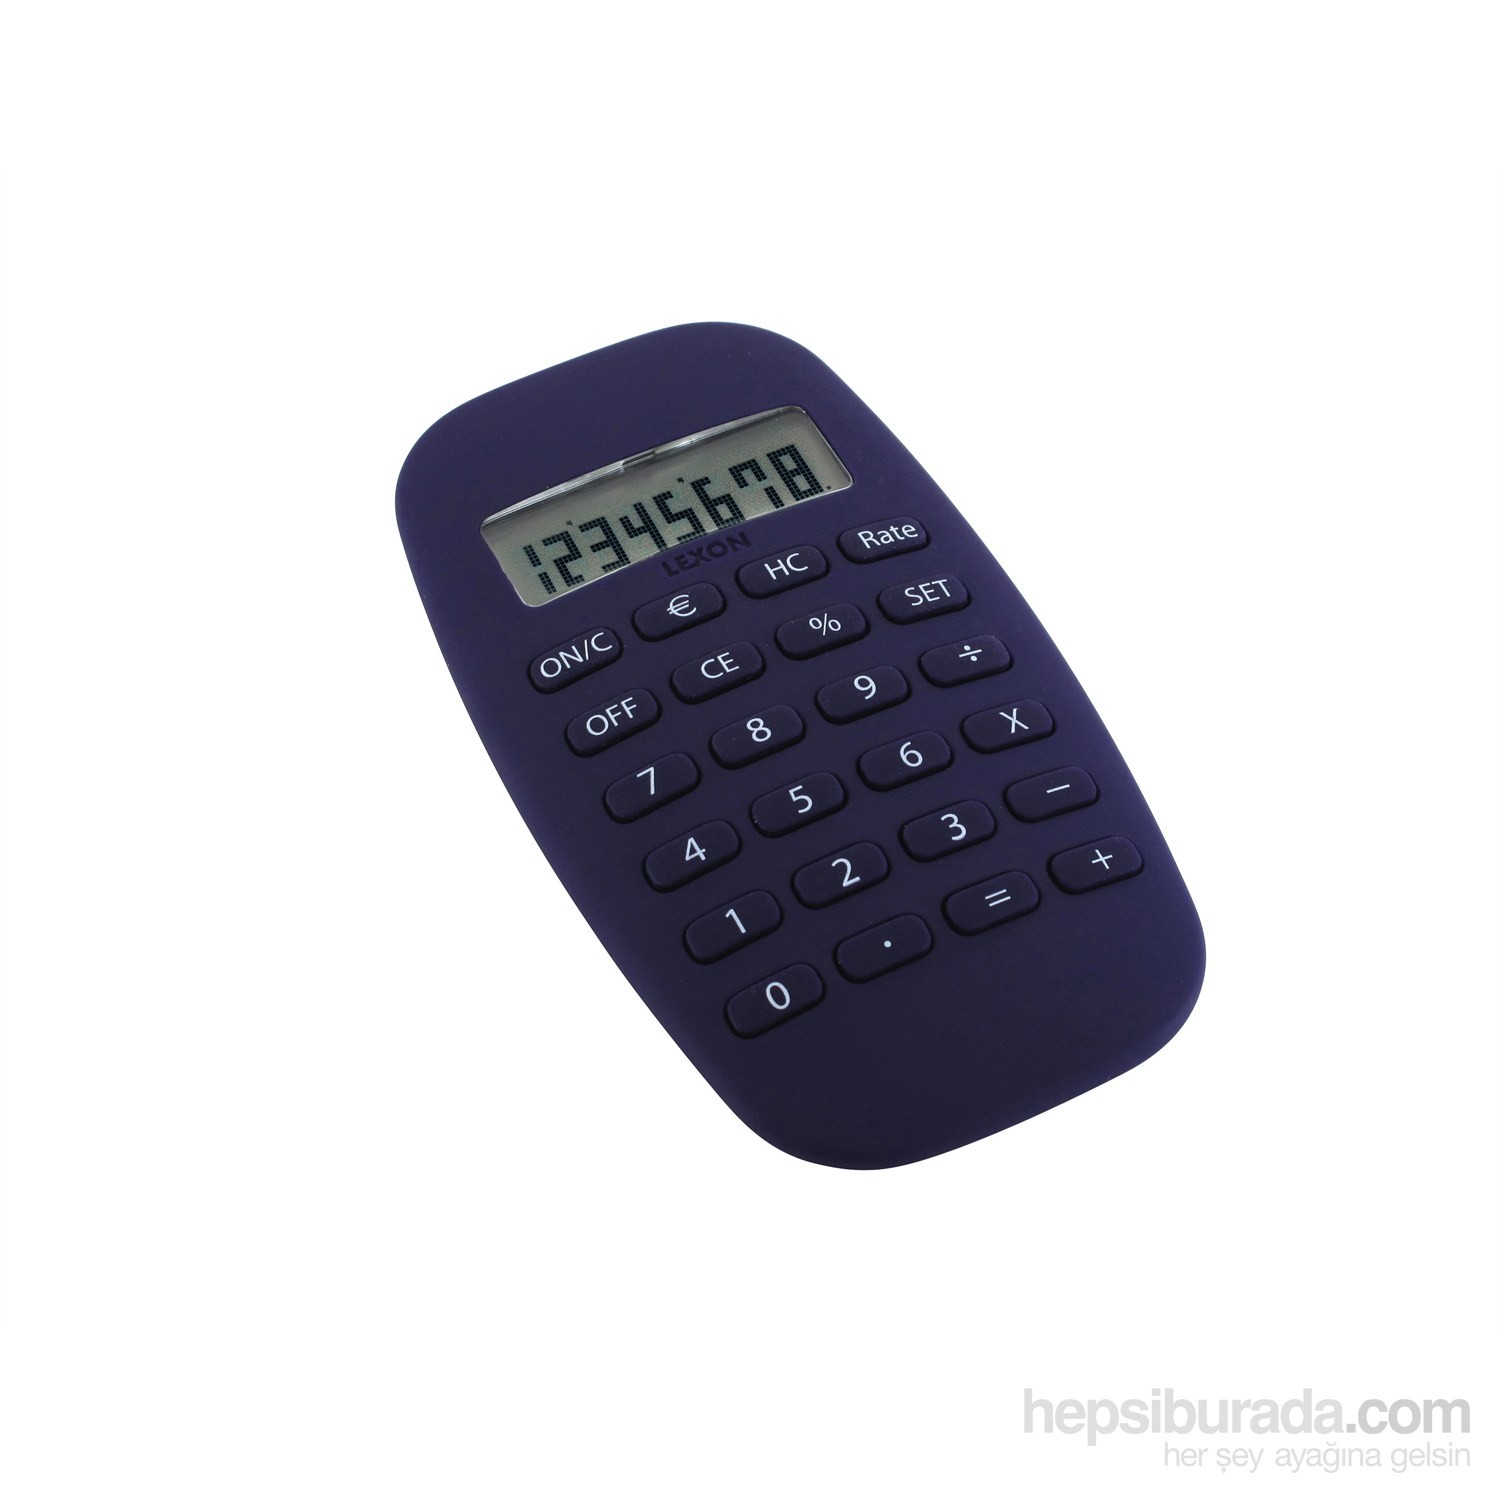 Lexon Galaxy calculator